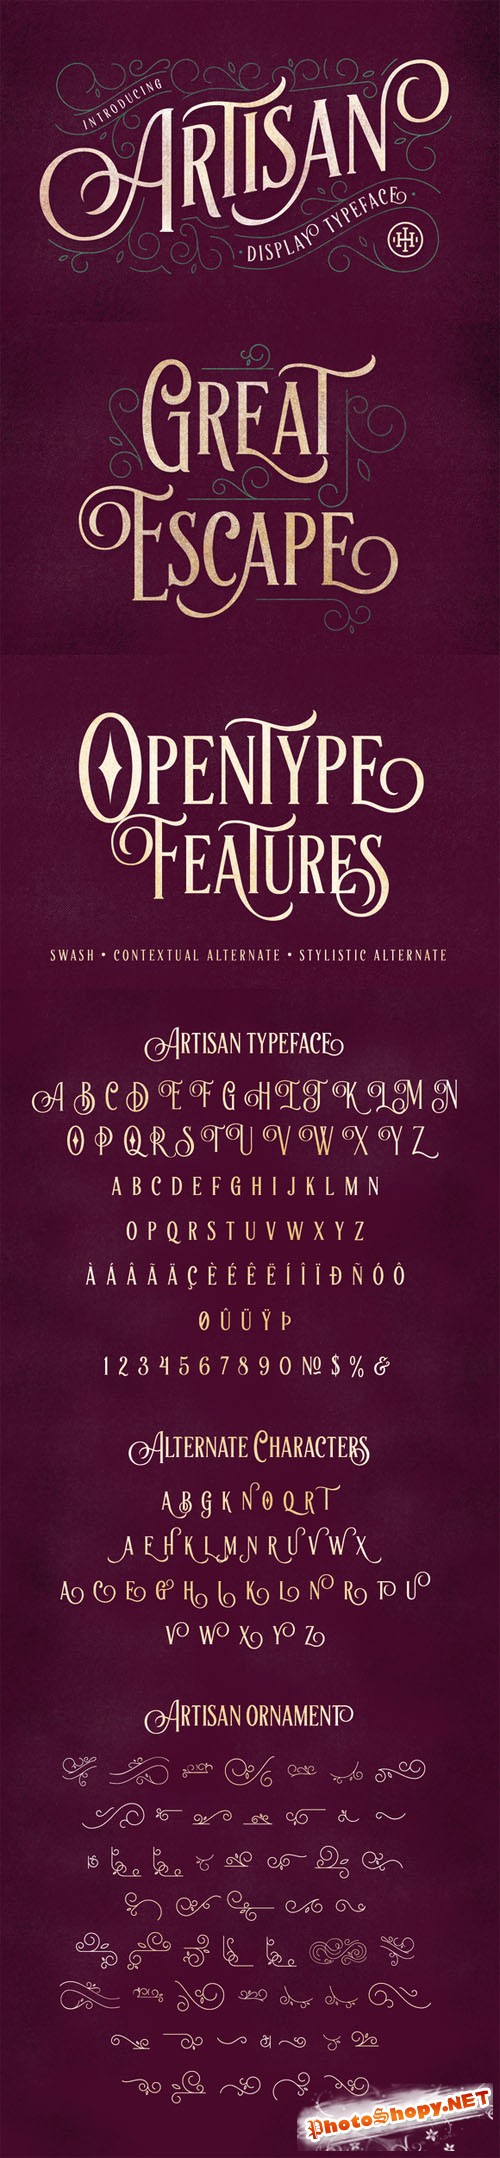 Artisan Display Typeface - Creativemarket 198813